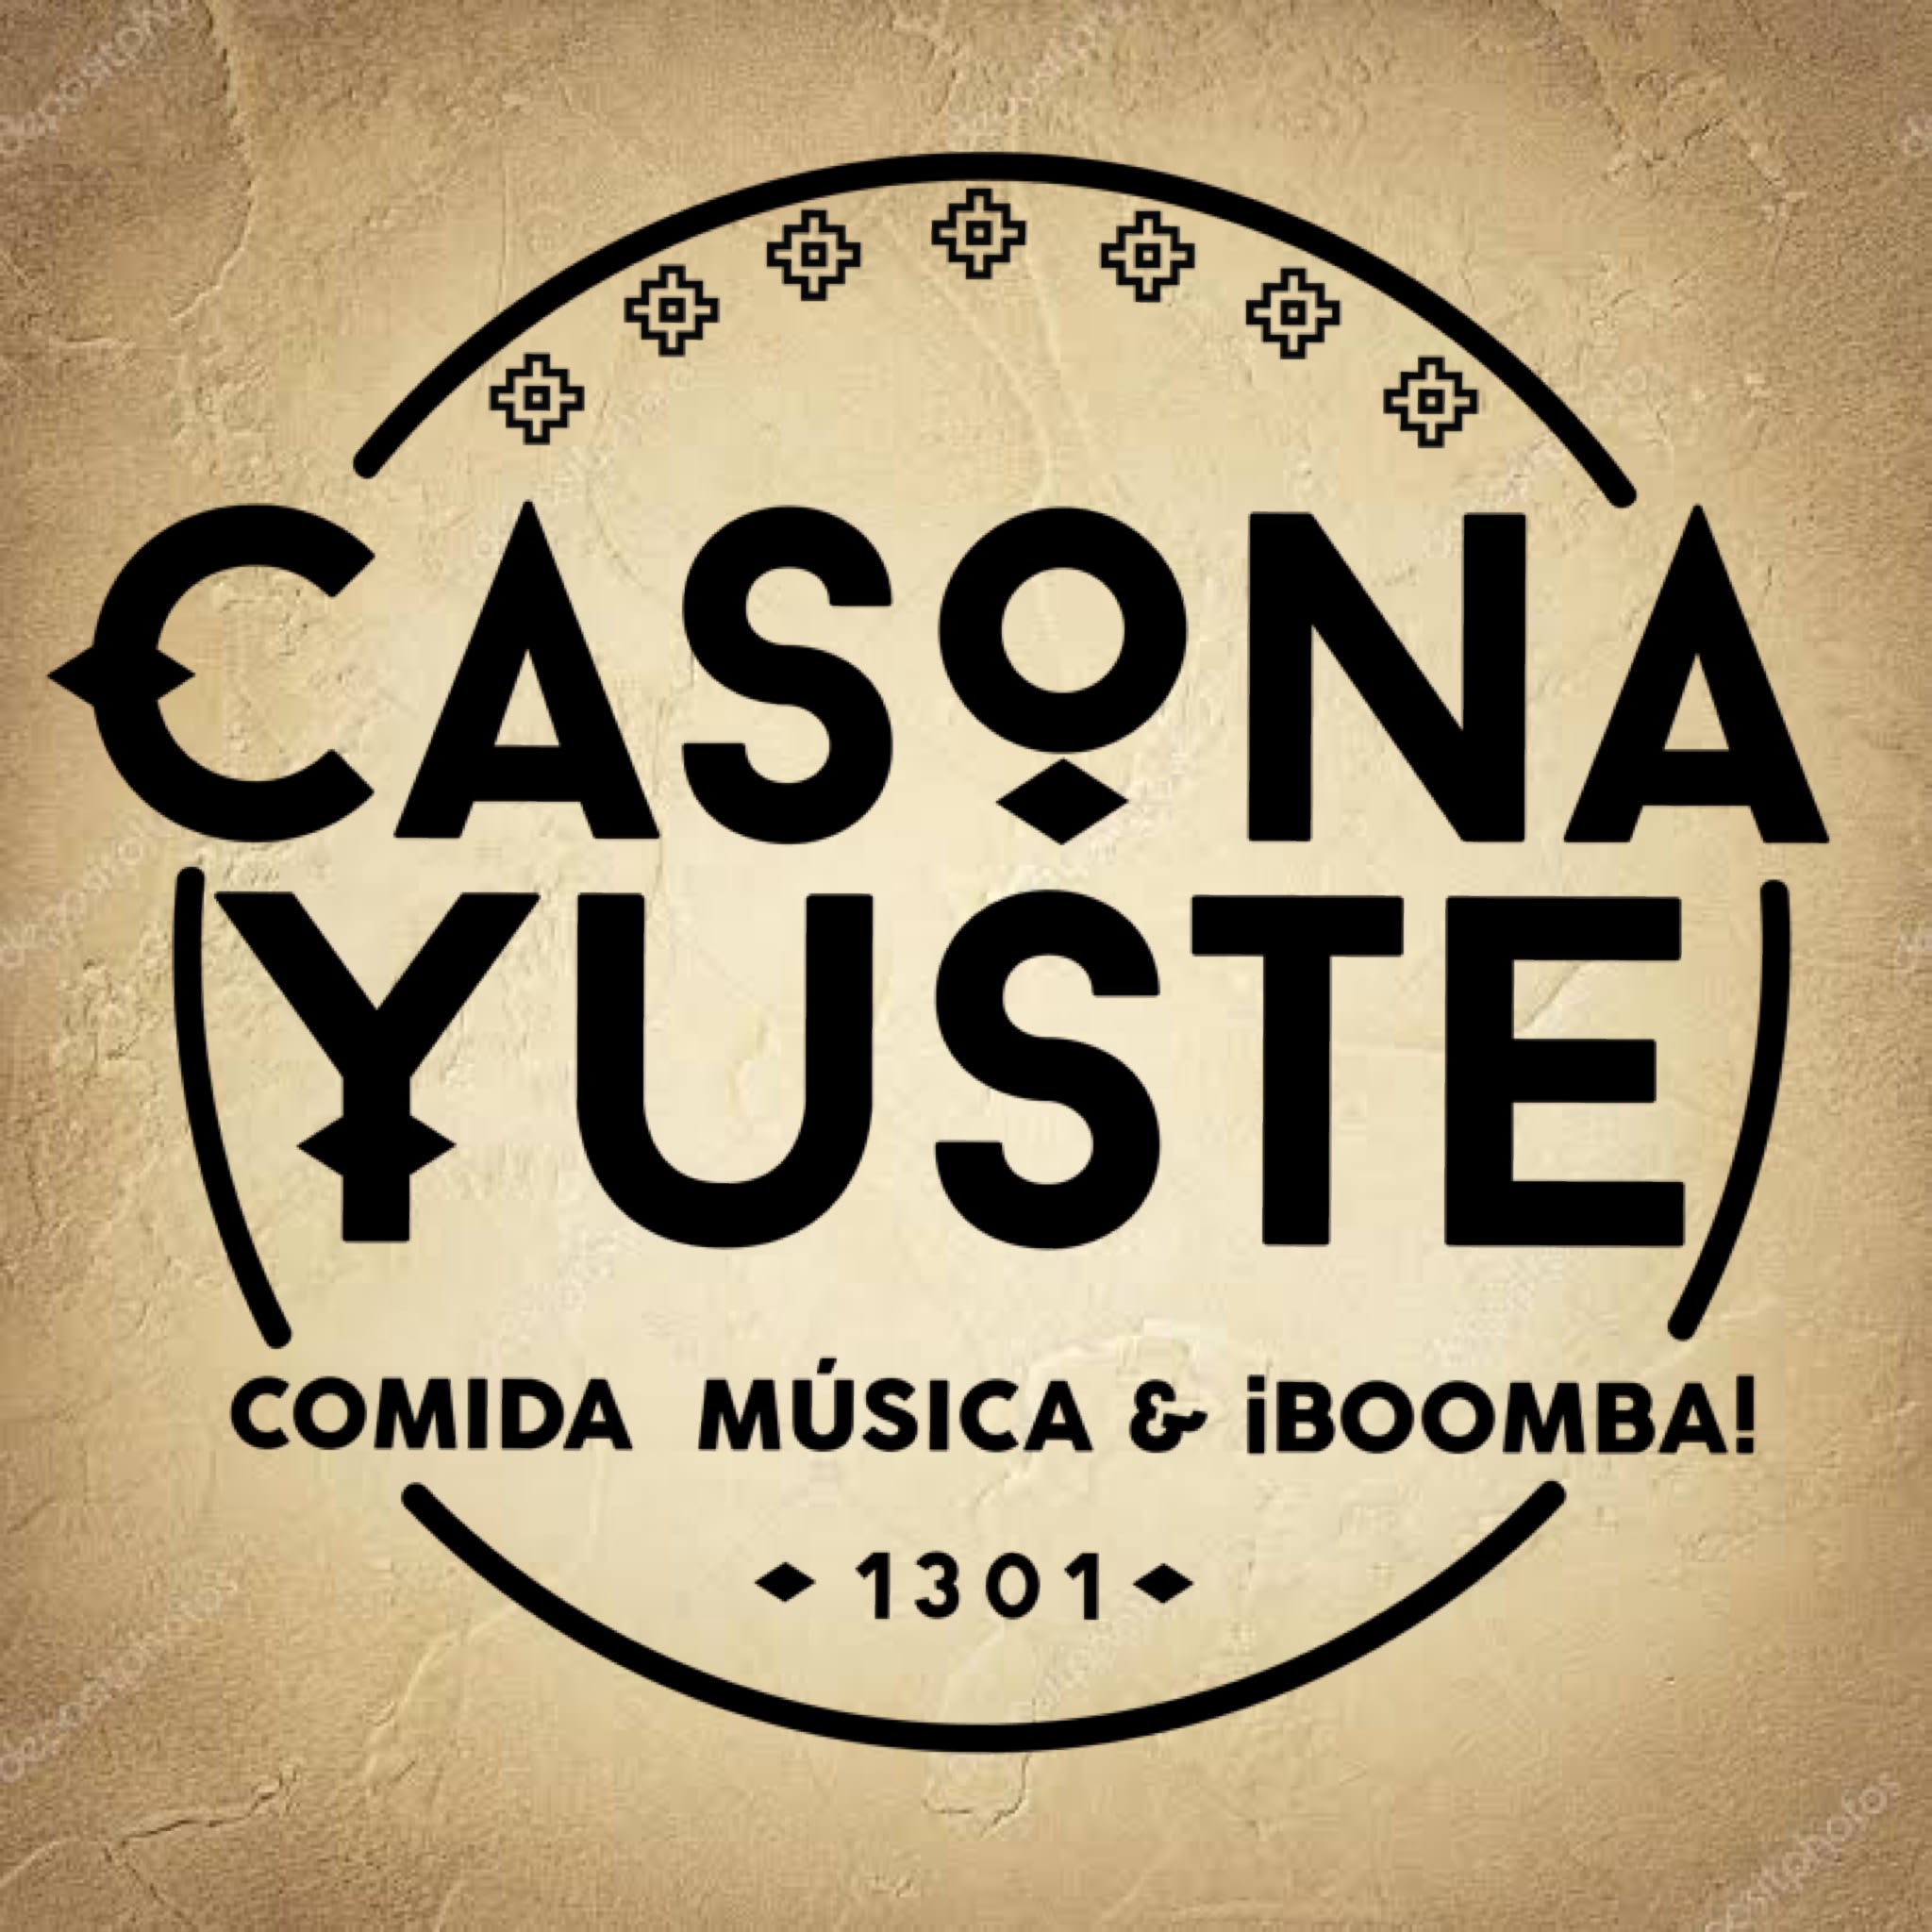 Casona Yuste